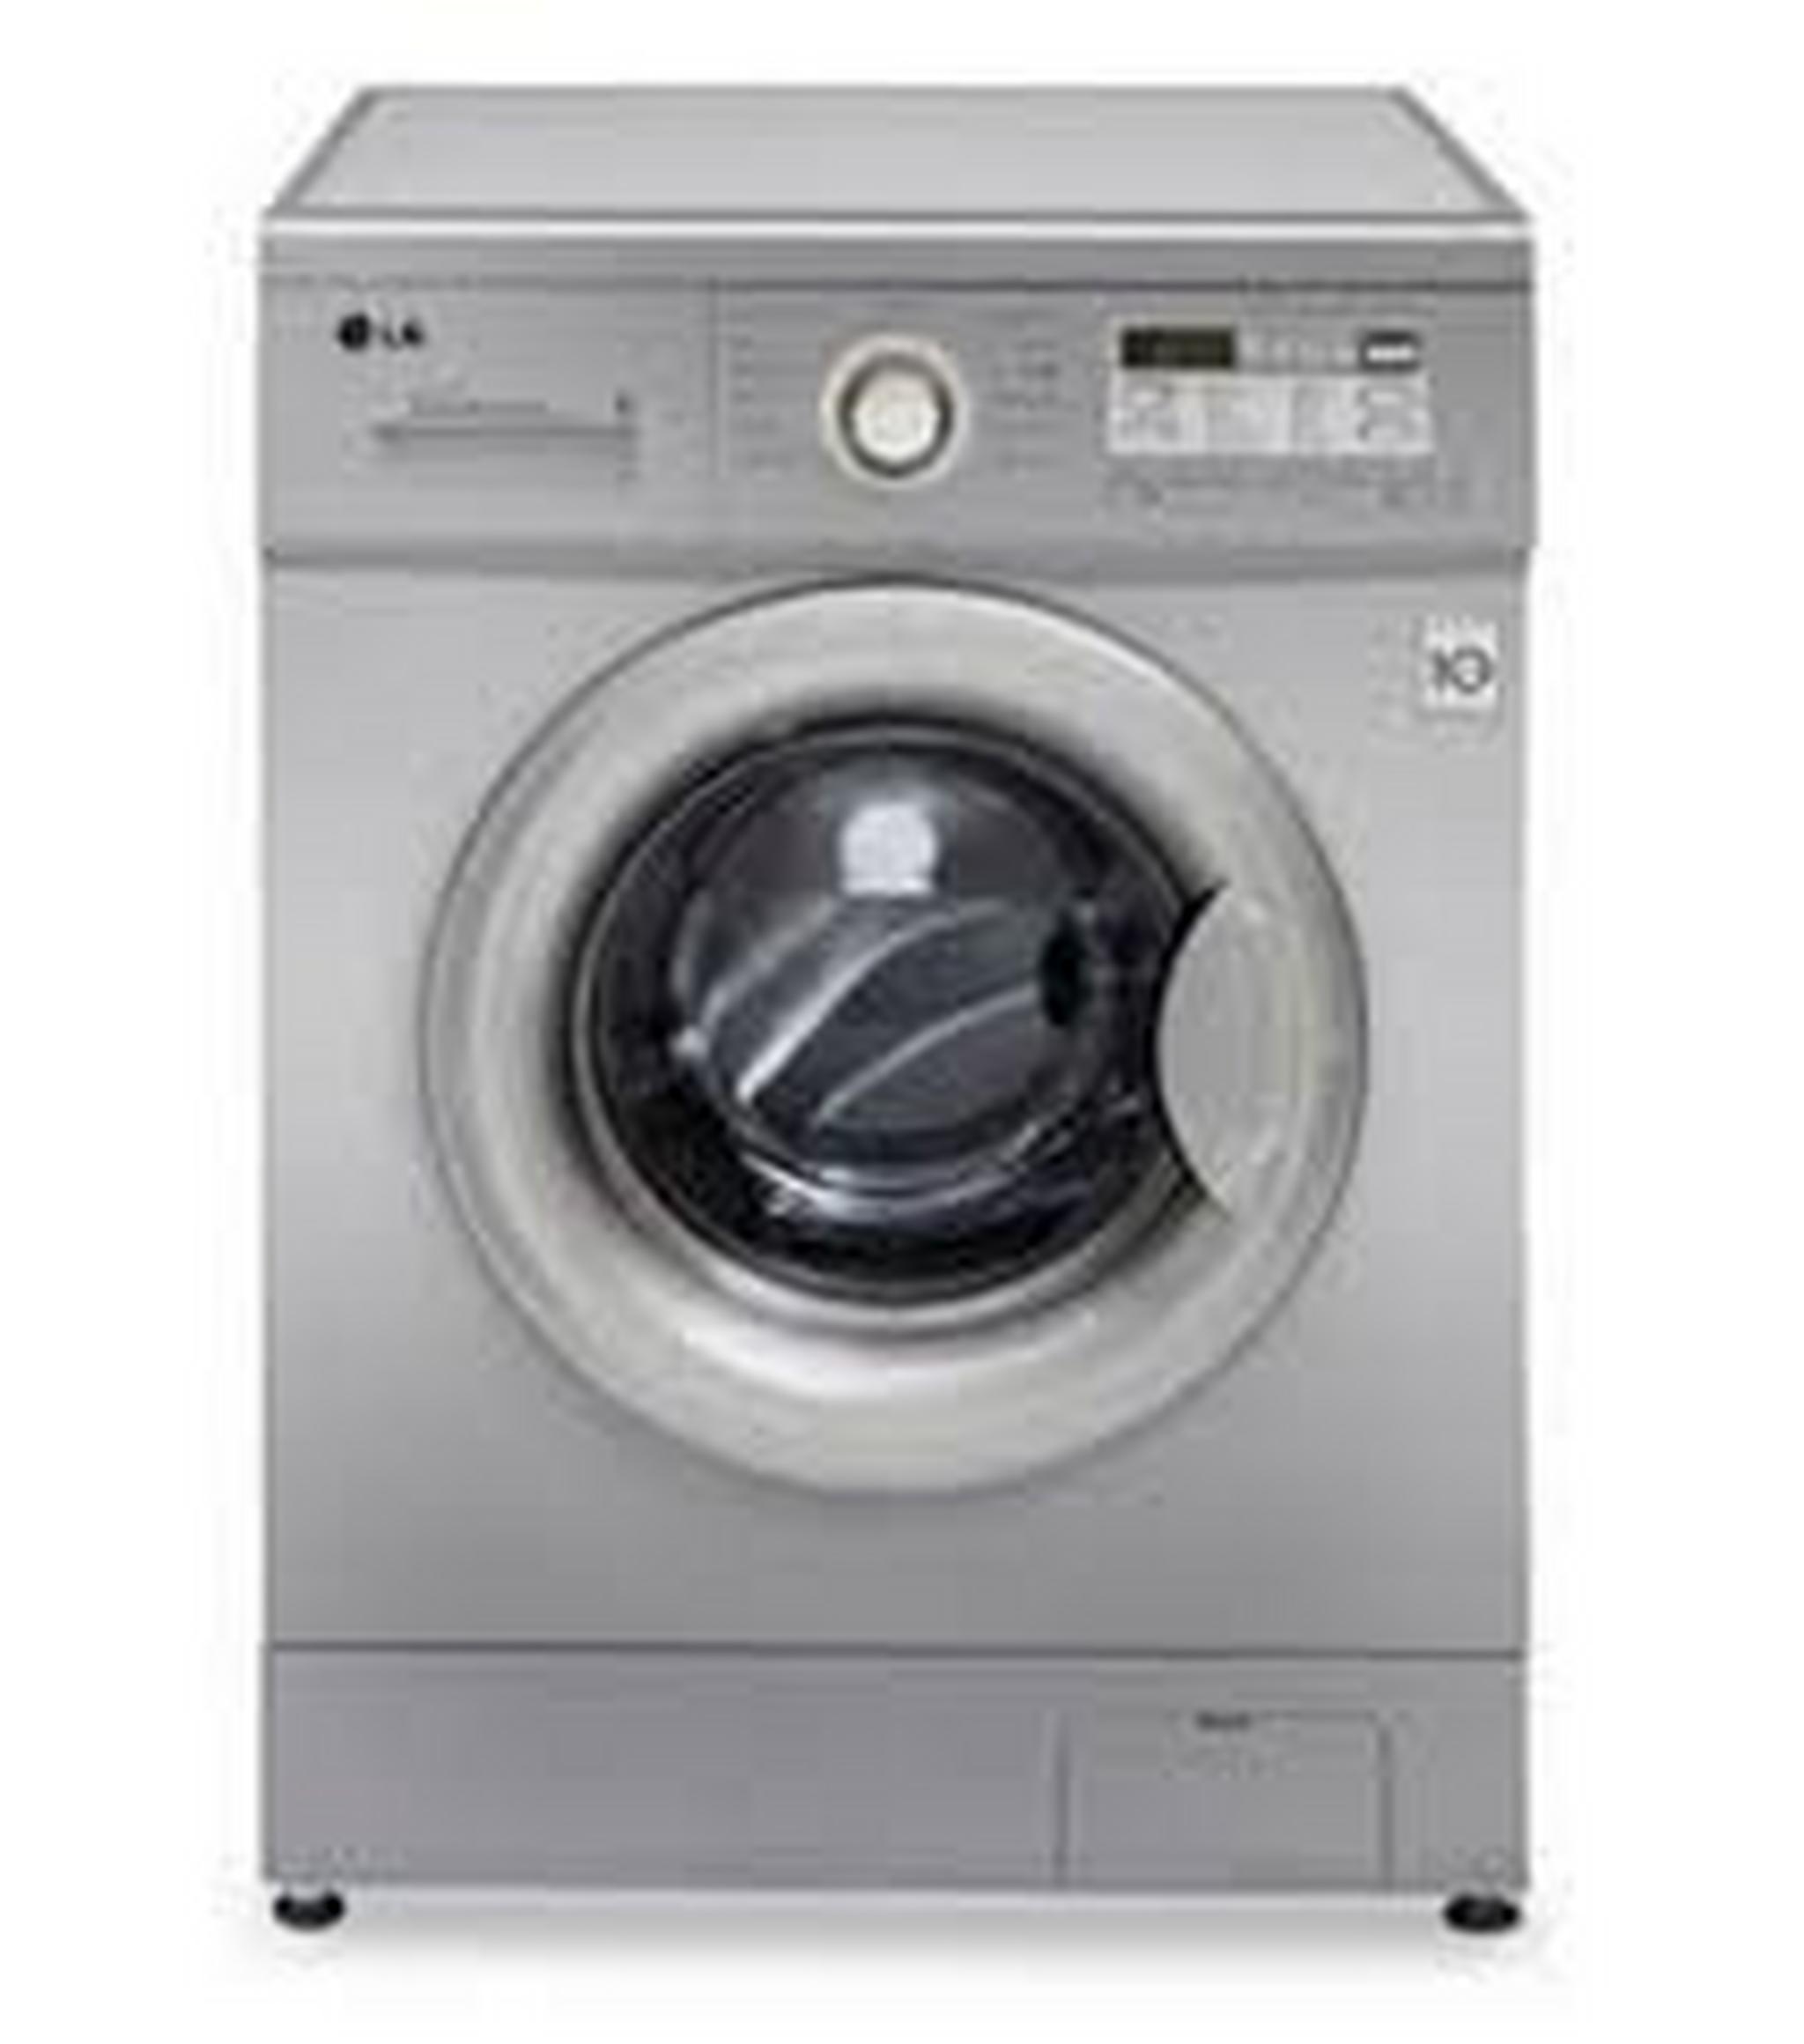 LG 8kg Front Load Washing Machine - Inox Silver WF0810SLV